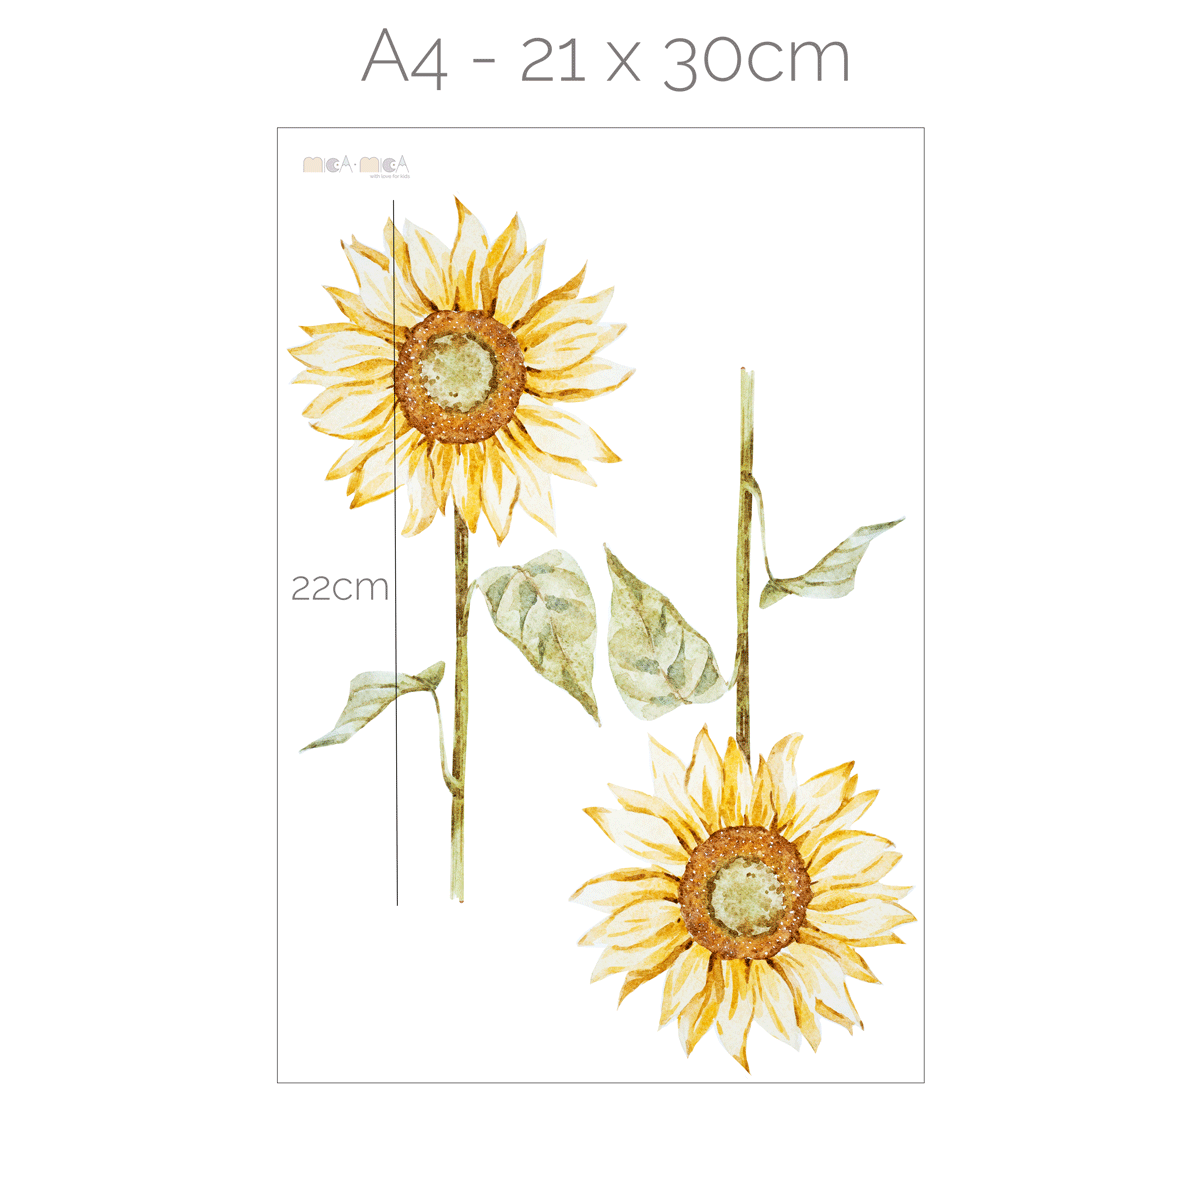 Flower wall stickers - Sunflowers